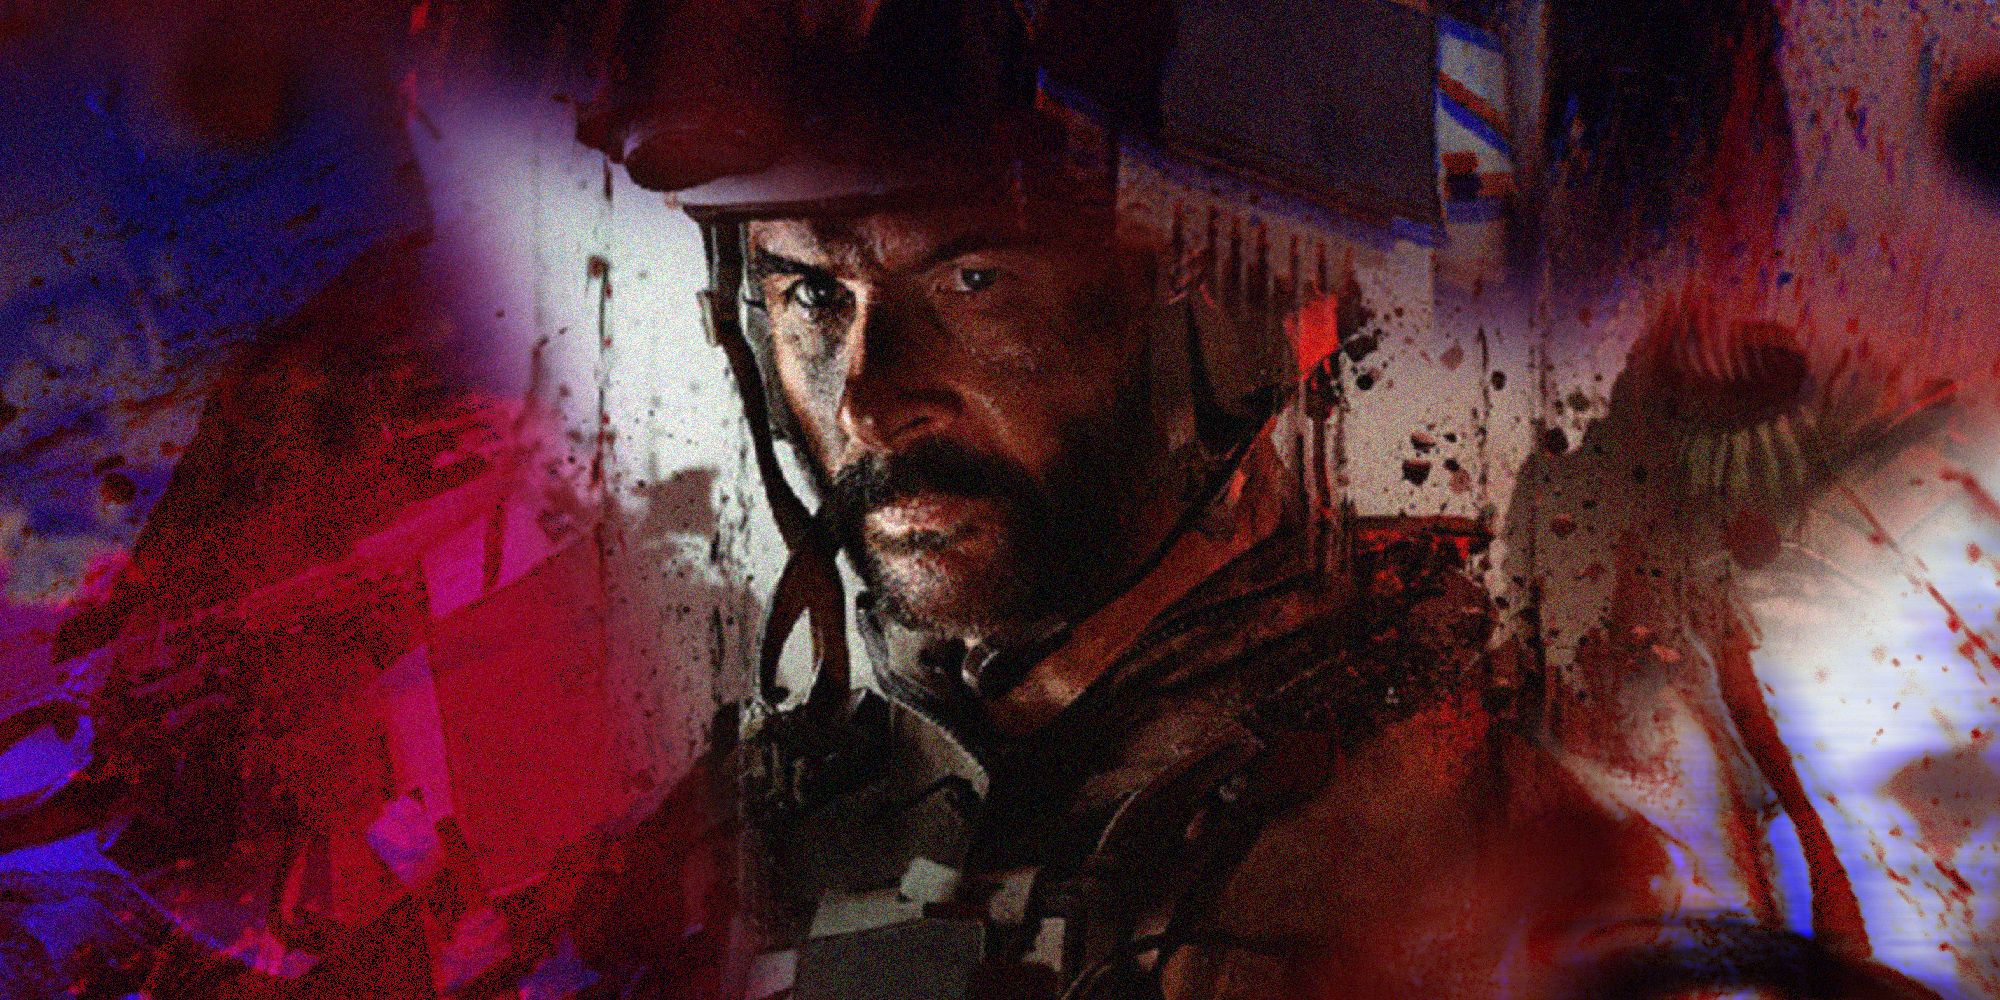 Call Of Duty: Modern Warfare 3 sinks into Metacritic's 10 worst